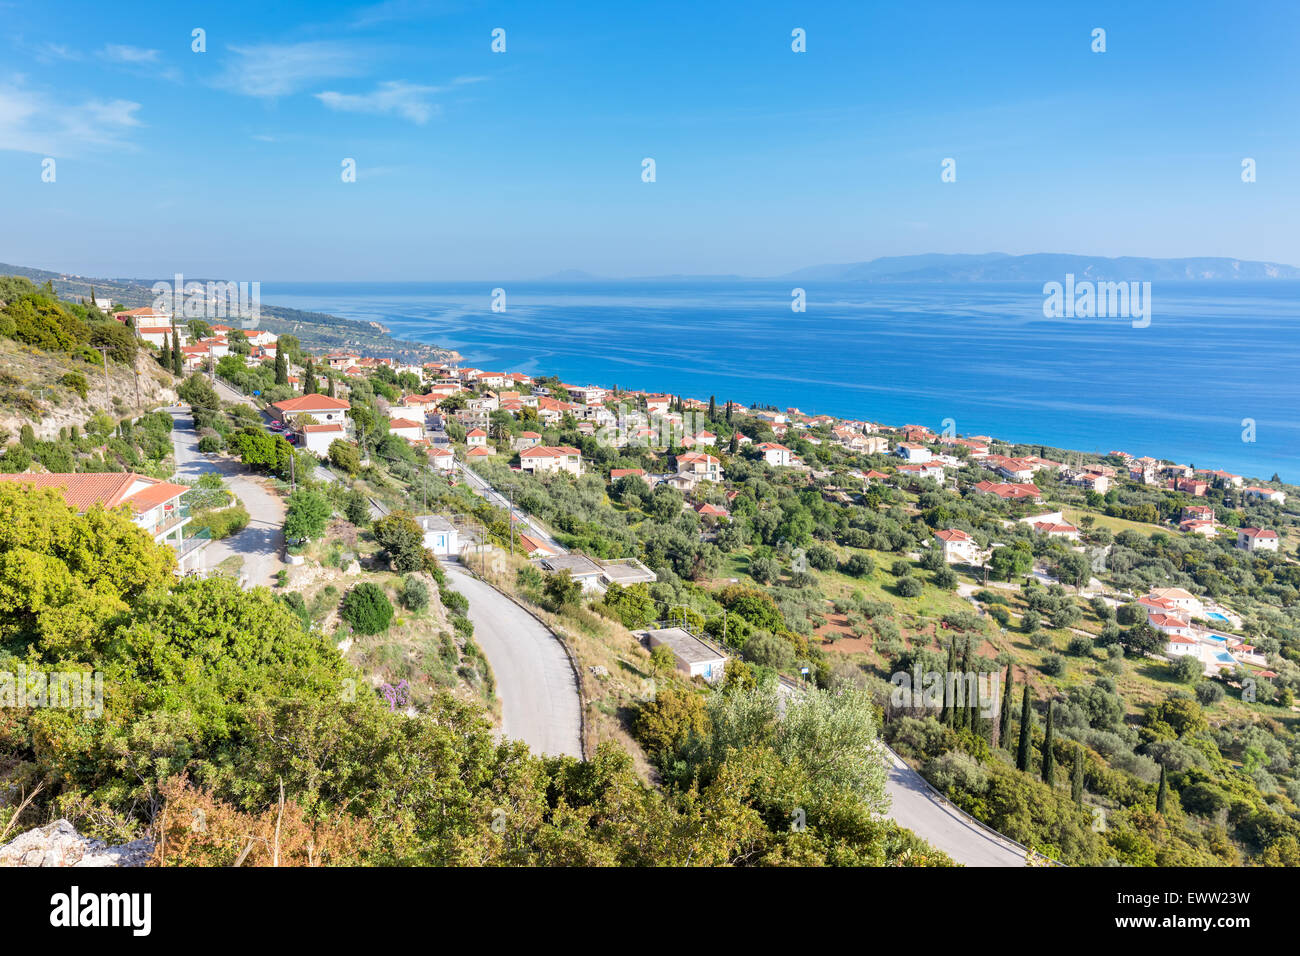 Greek village showing houses at coast near blue sea in Kefalonia Greece Stock Photo